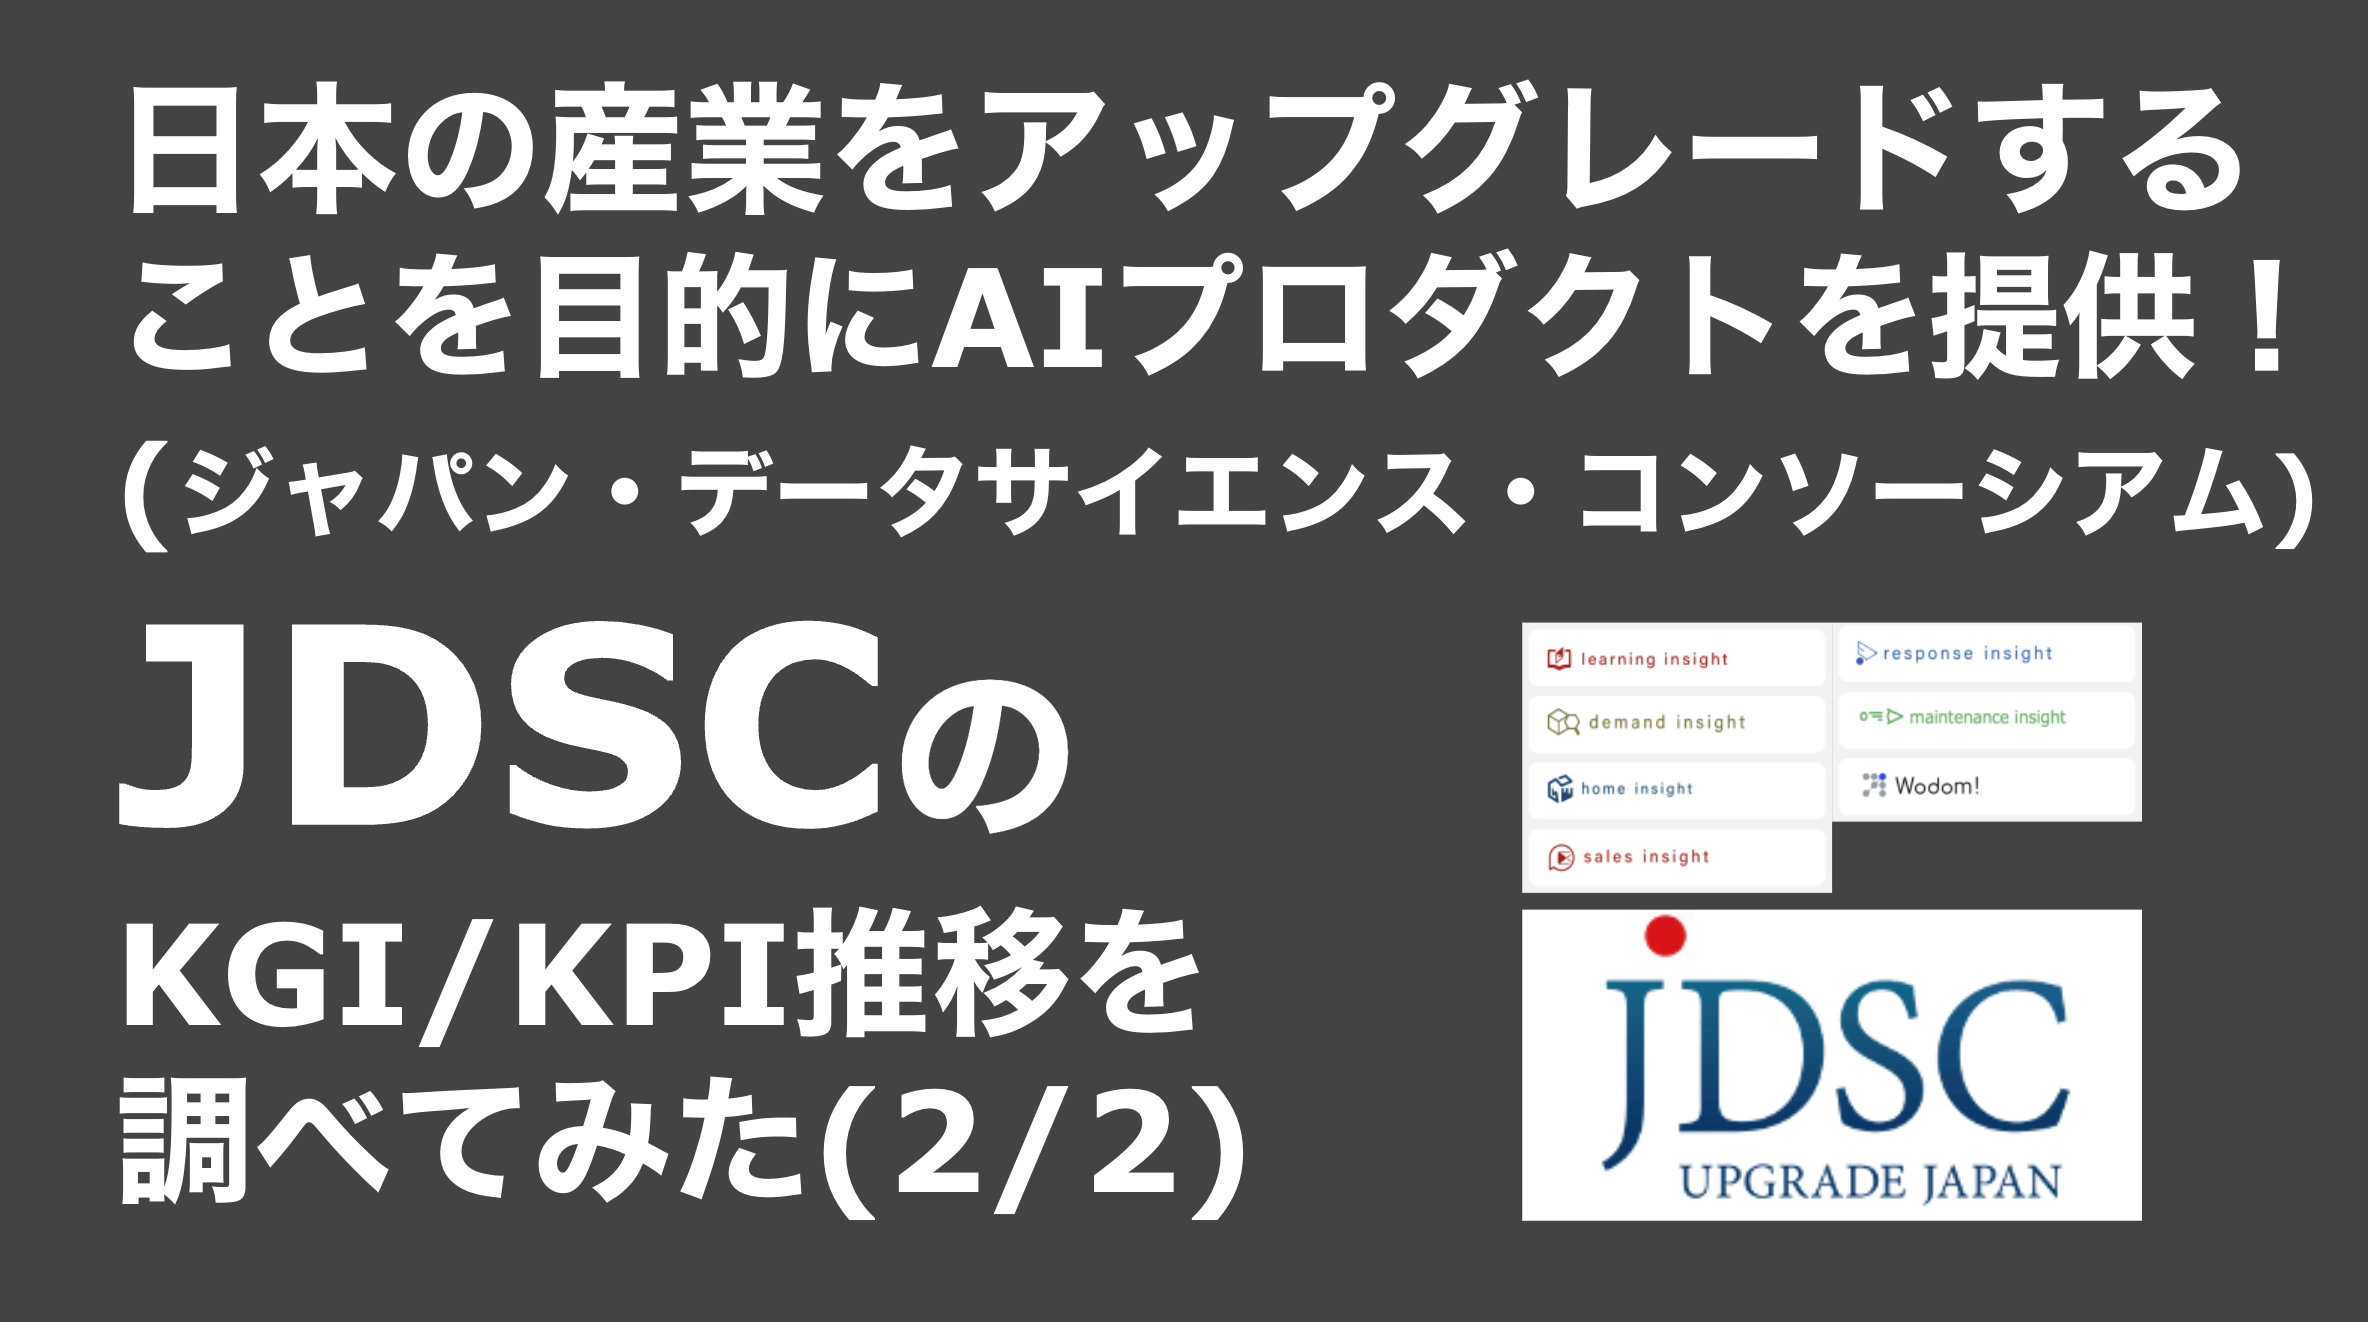 saaslife_日本の産業をアップグレードすることを目的にAIプロダクトを提供！JDSC(ジャパン・データサイエンス・コンソーシアム)のKGI/KPI推移を調べてみた(2/2)